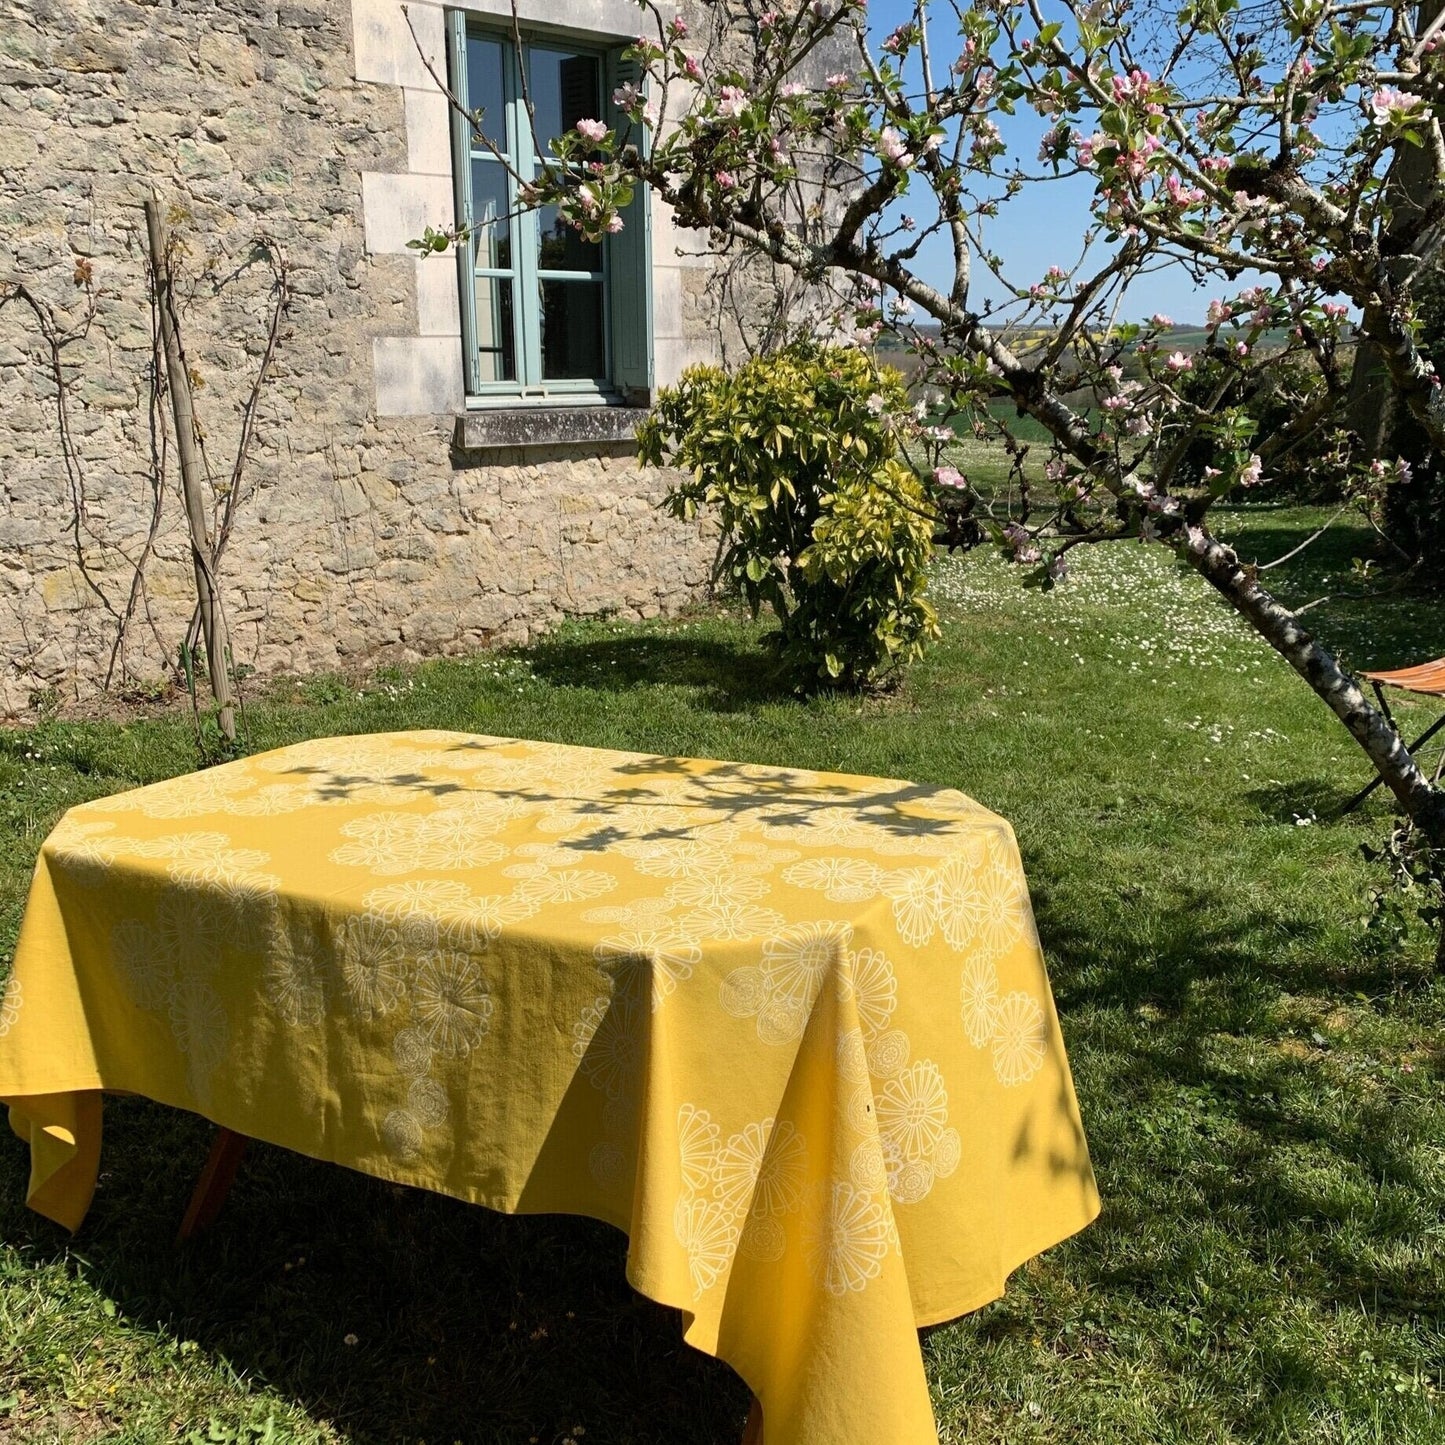 Heavy linen ecofriendly tablecloth Yellow Daisies